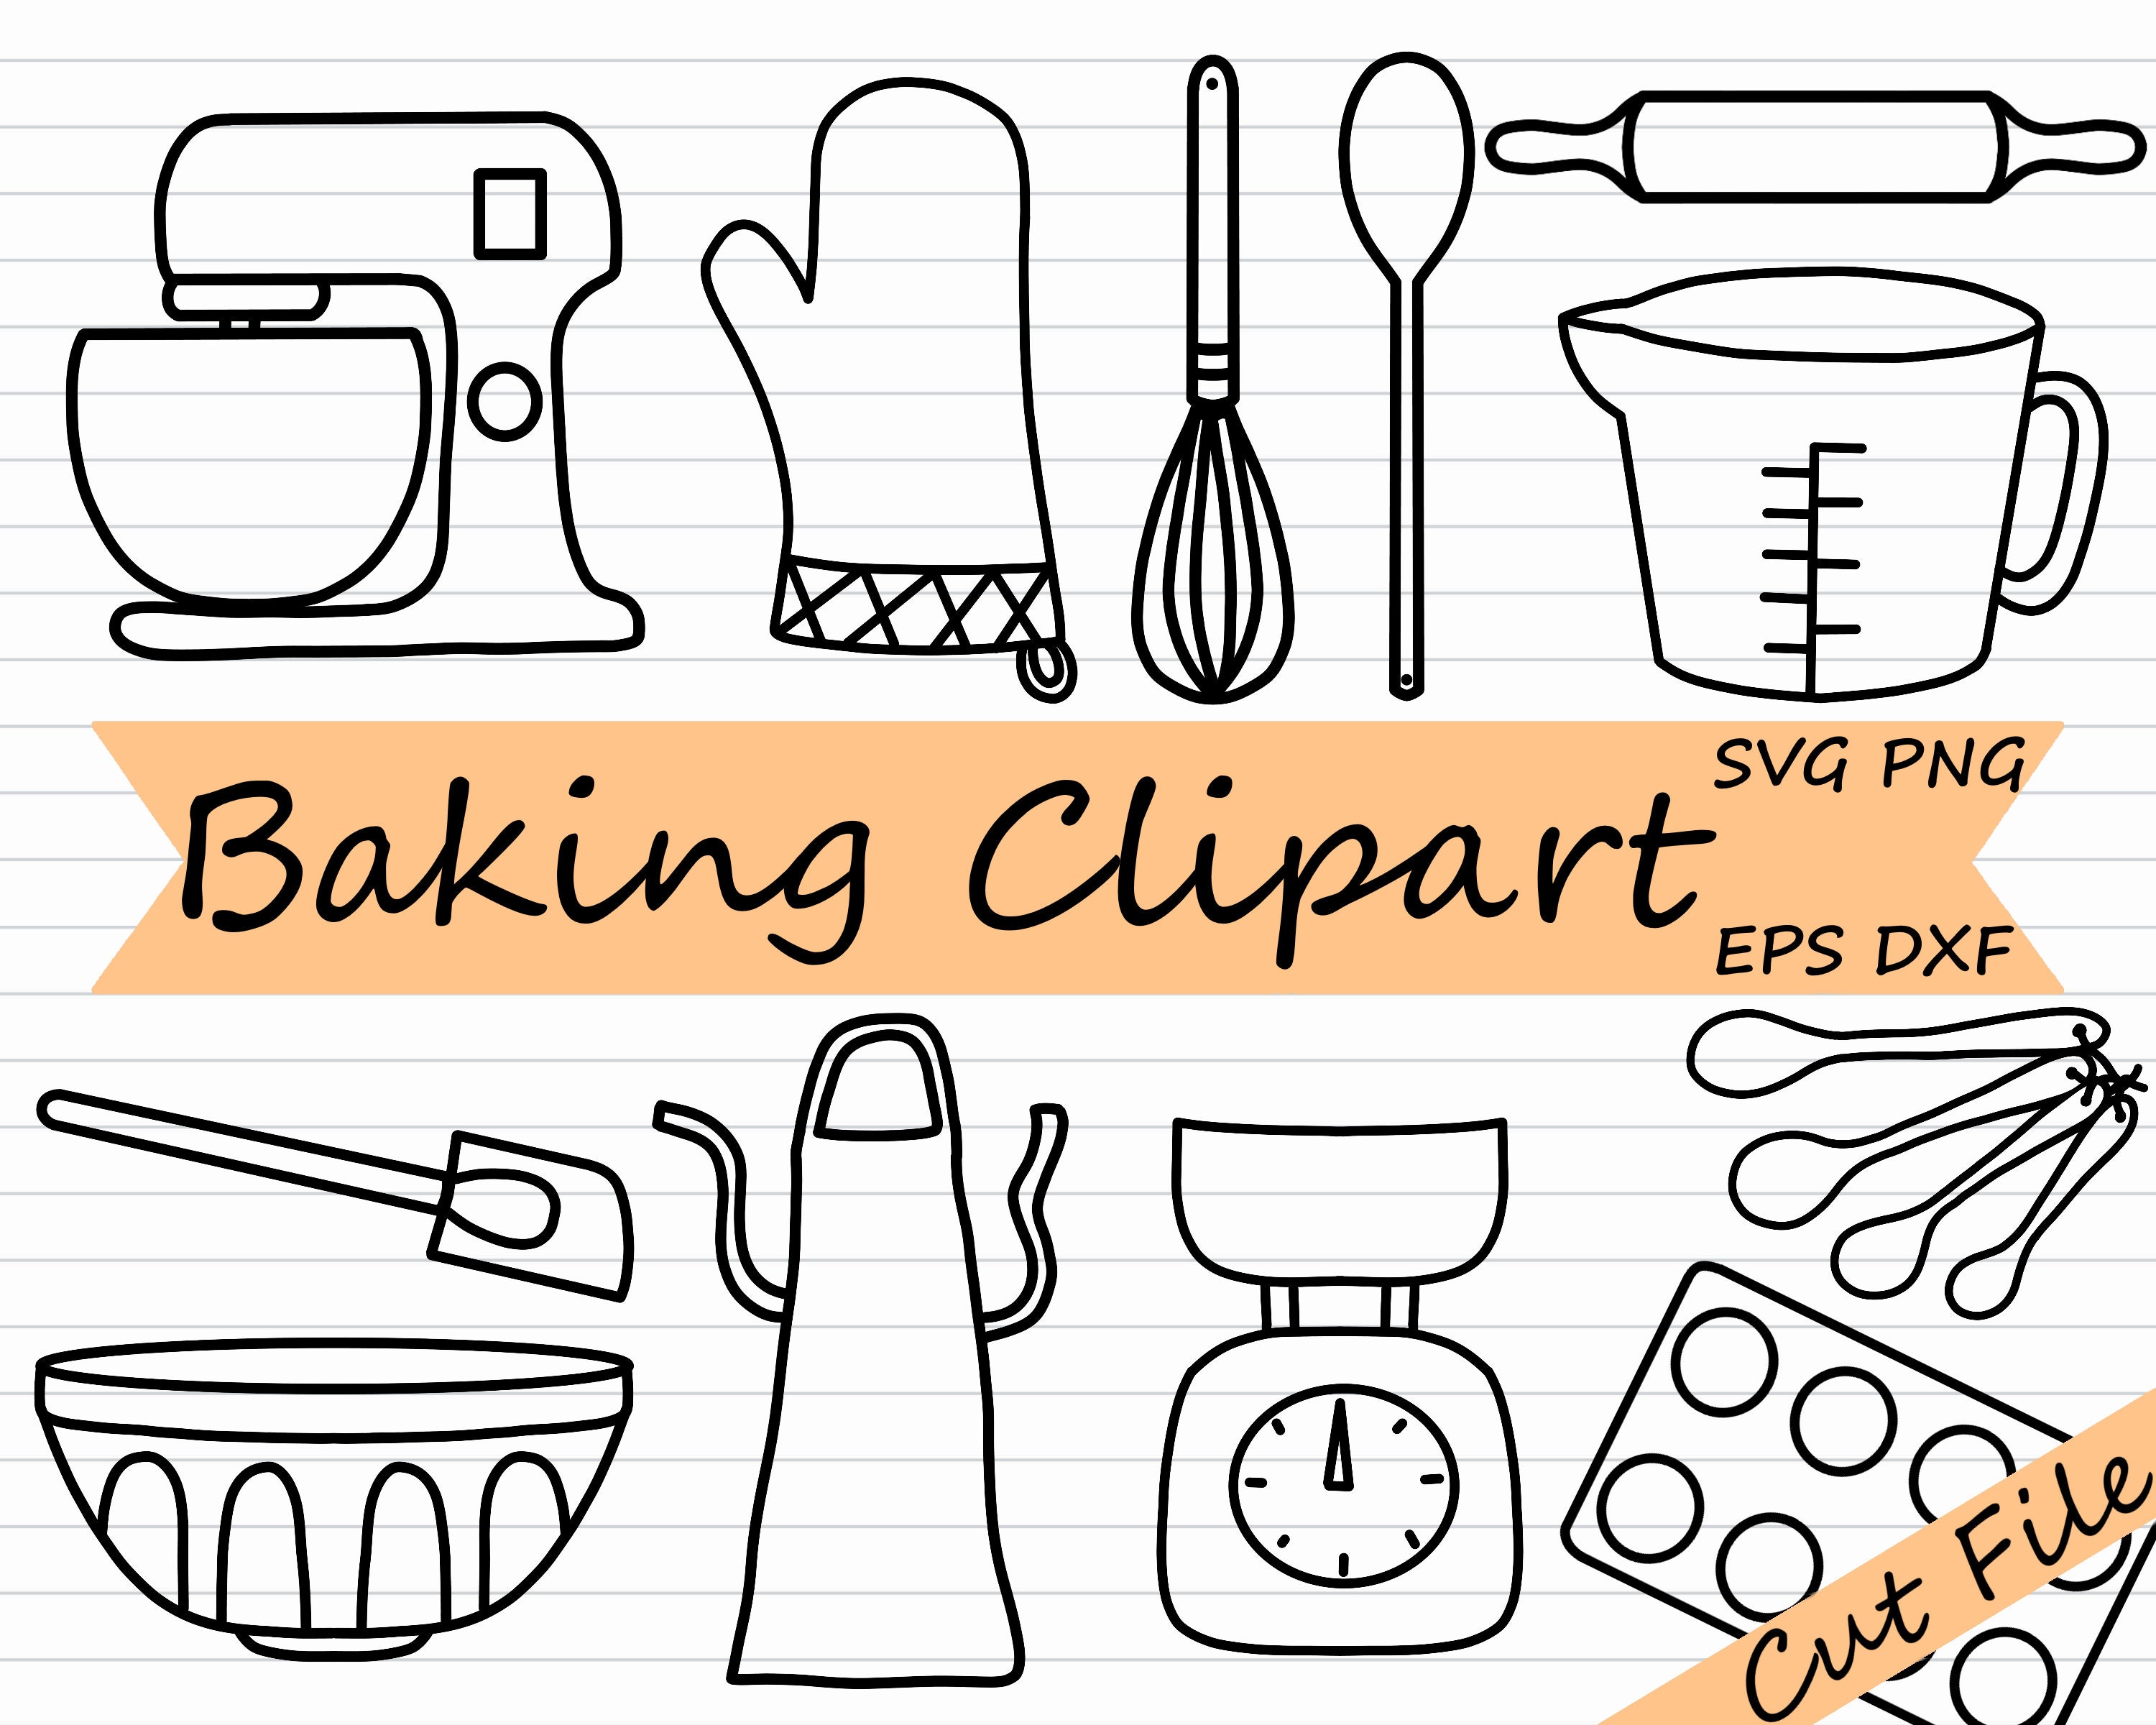 Baking Utensils Kitchen Equipment Vector Graphic Design Template